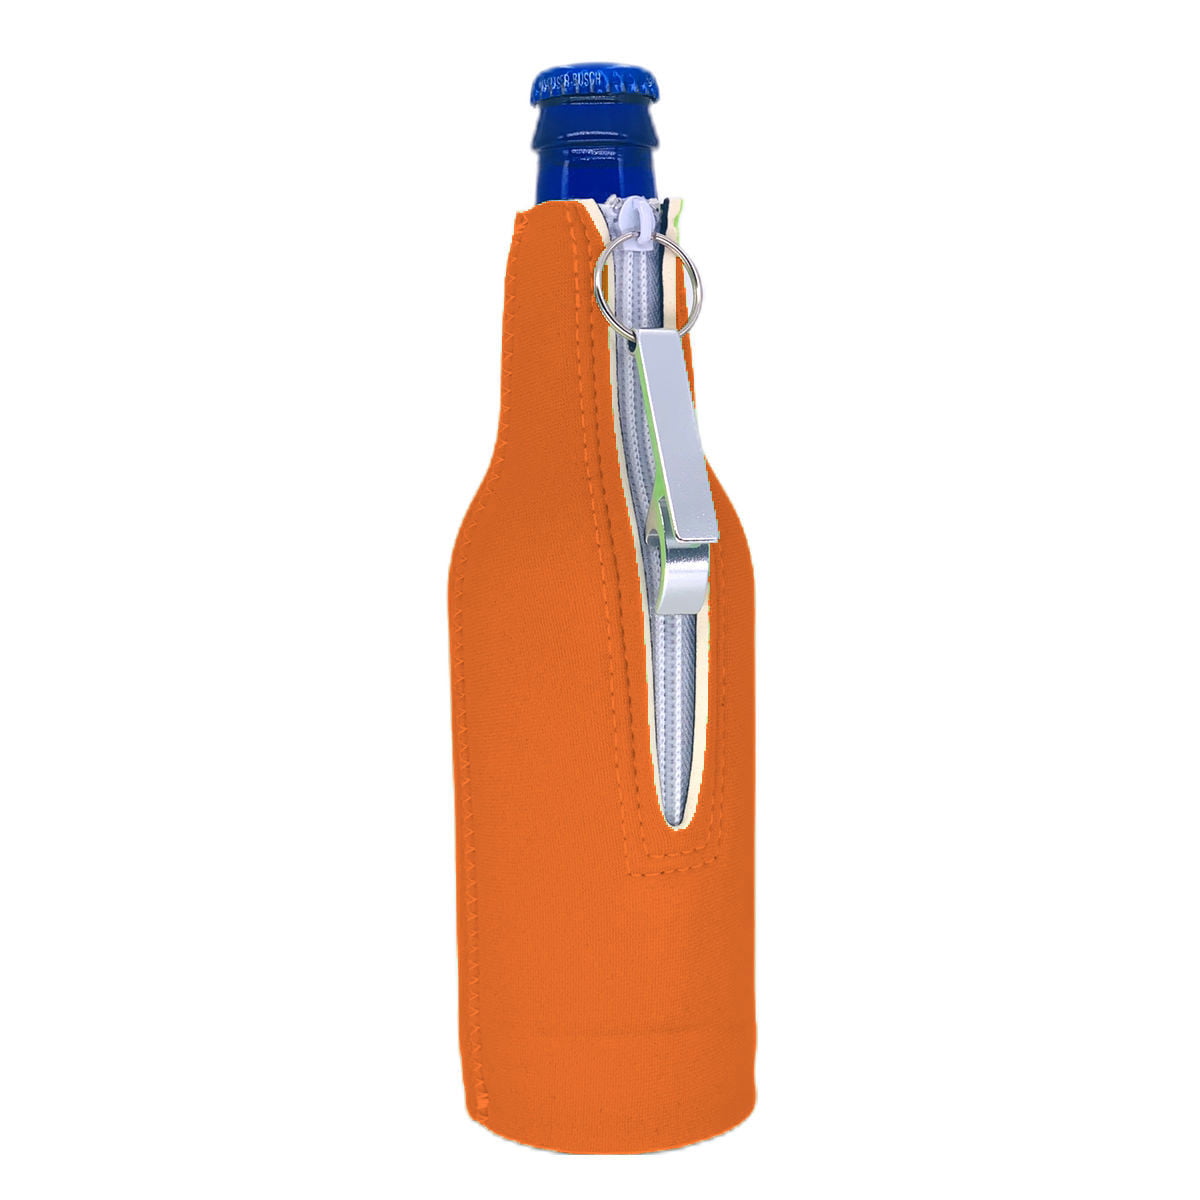 12 oz Beer Bottle Holder with Opener & Stoper Stainless Can Insulator -Rose  Gold